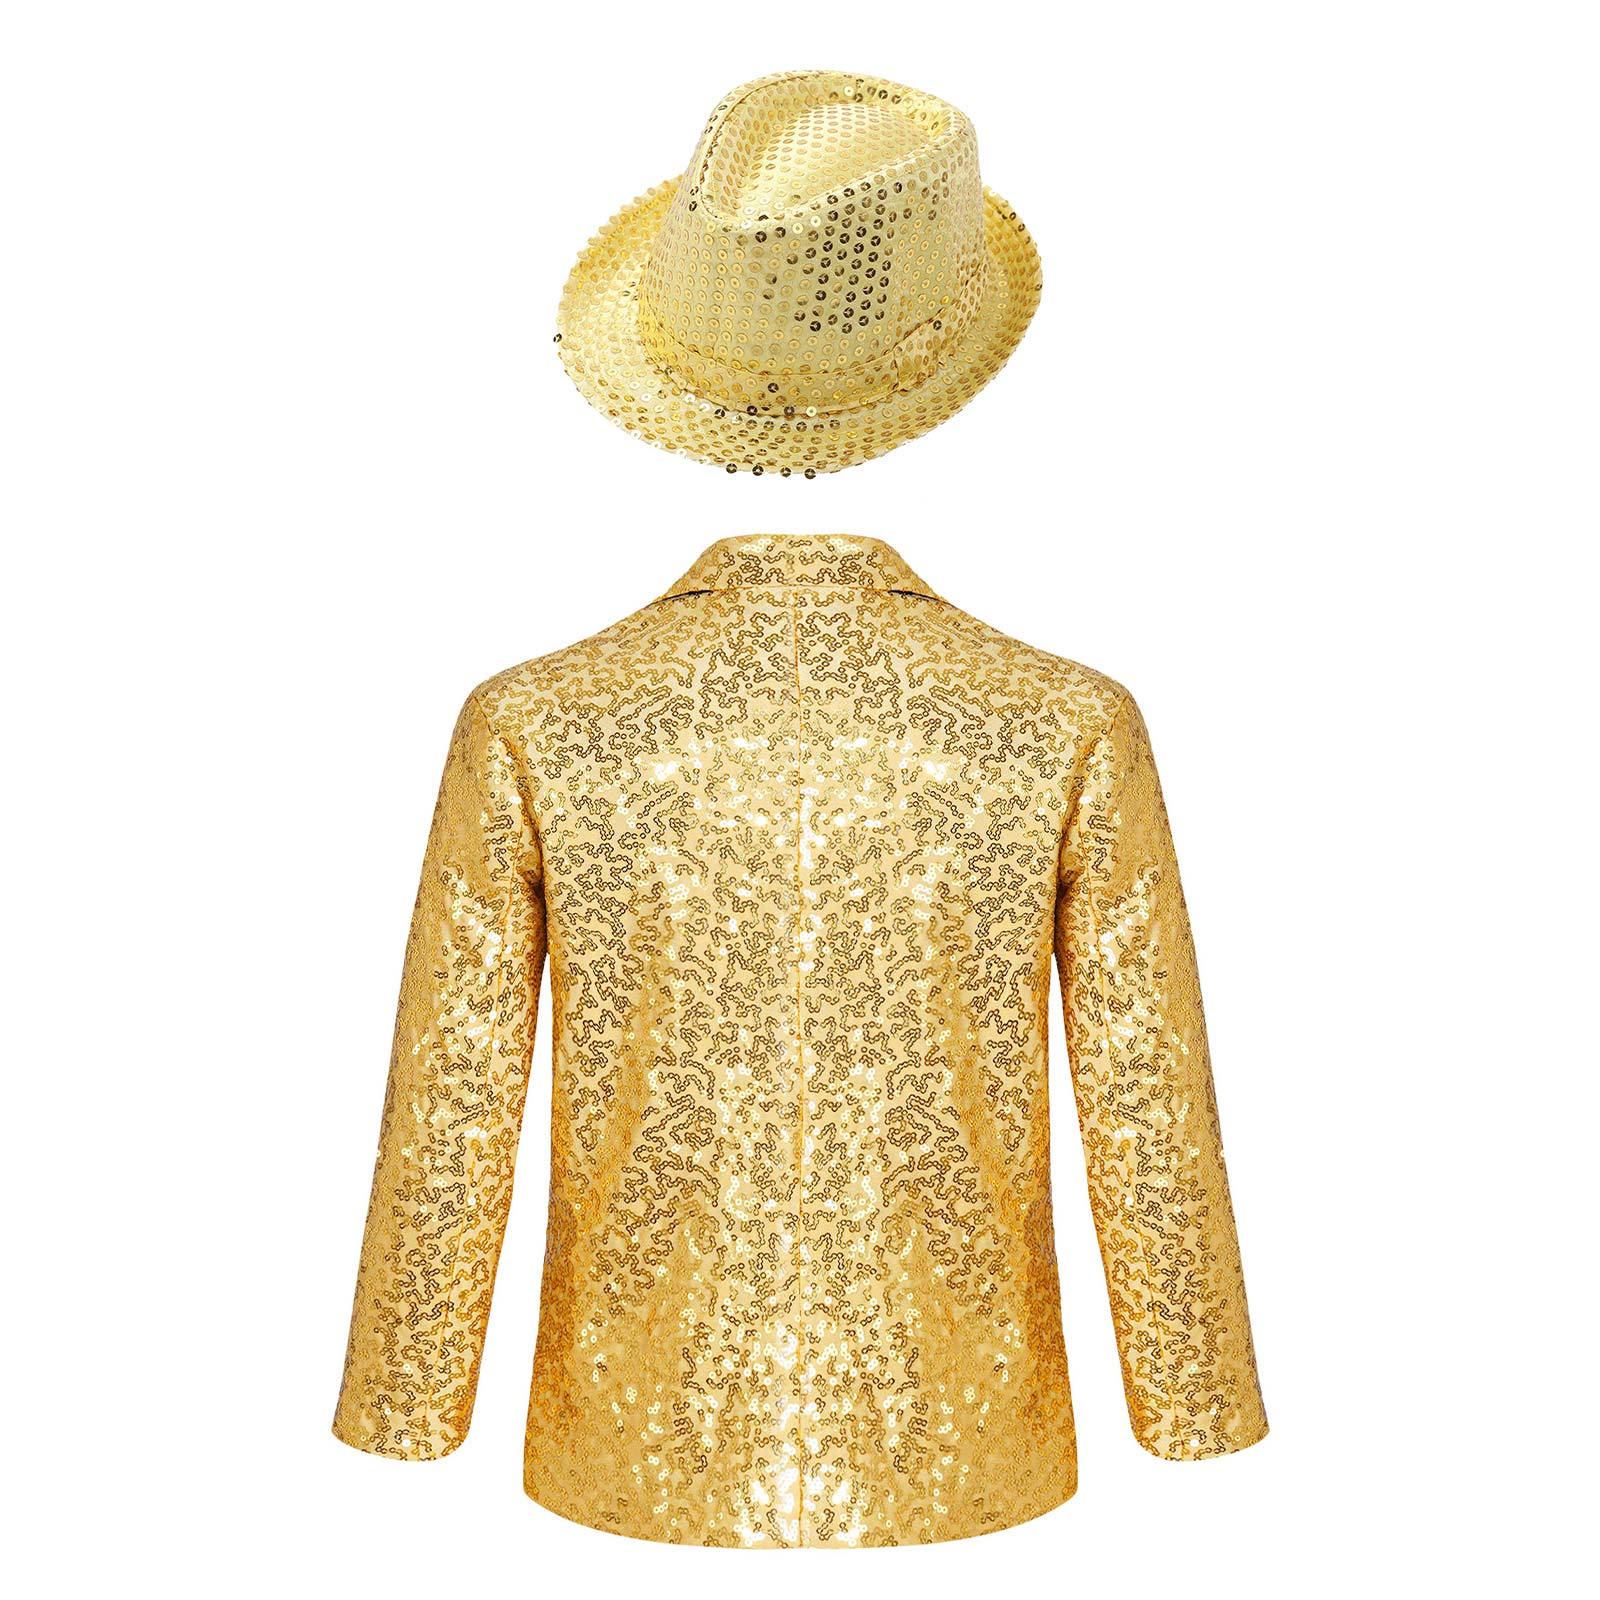 MSemis Kids Boys Shiny Sequin Suit Jacket Party Blazer Dance Tuxedo Costume with Hat,Size 6-16 Gold 12 - image 2 of 6